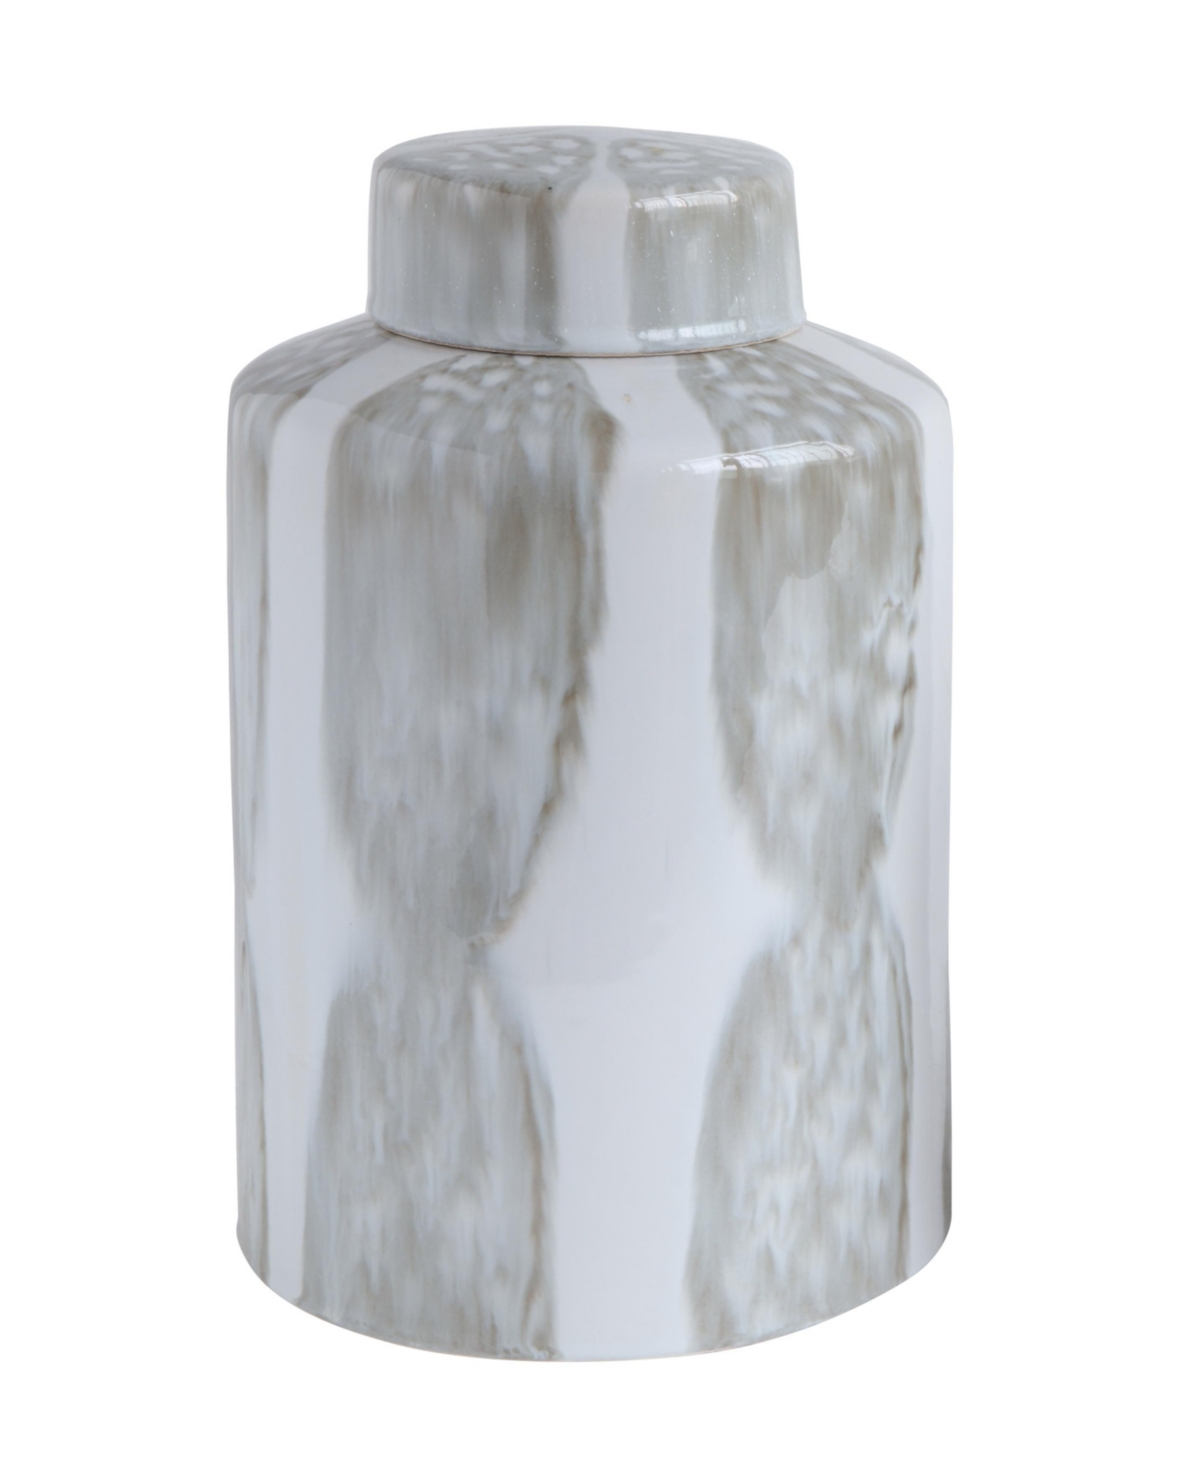 Bloomingville Large Grey & White Decorative Stoneware Ginger Jar with Lid